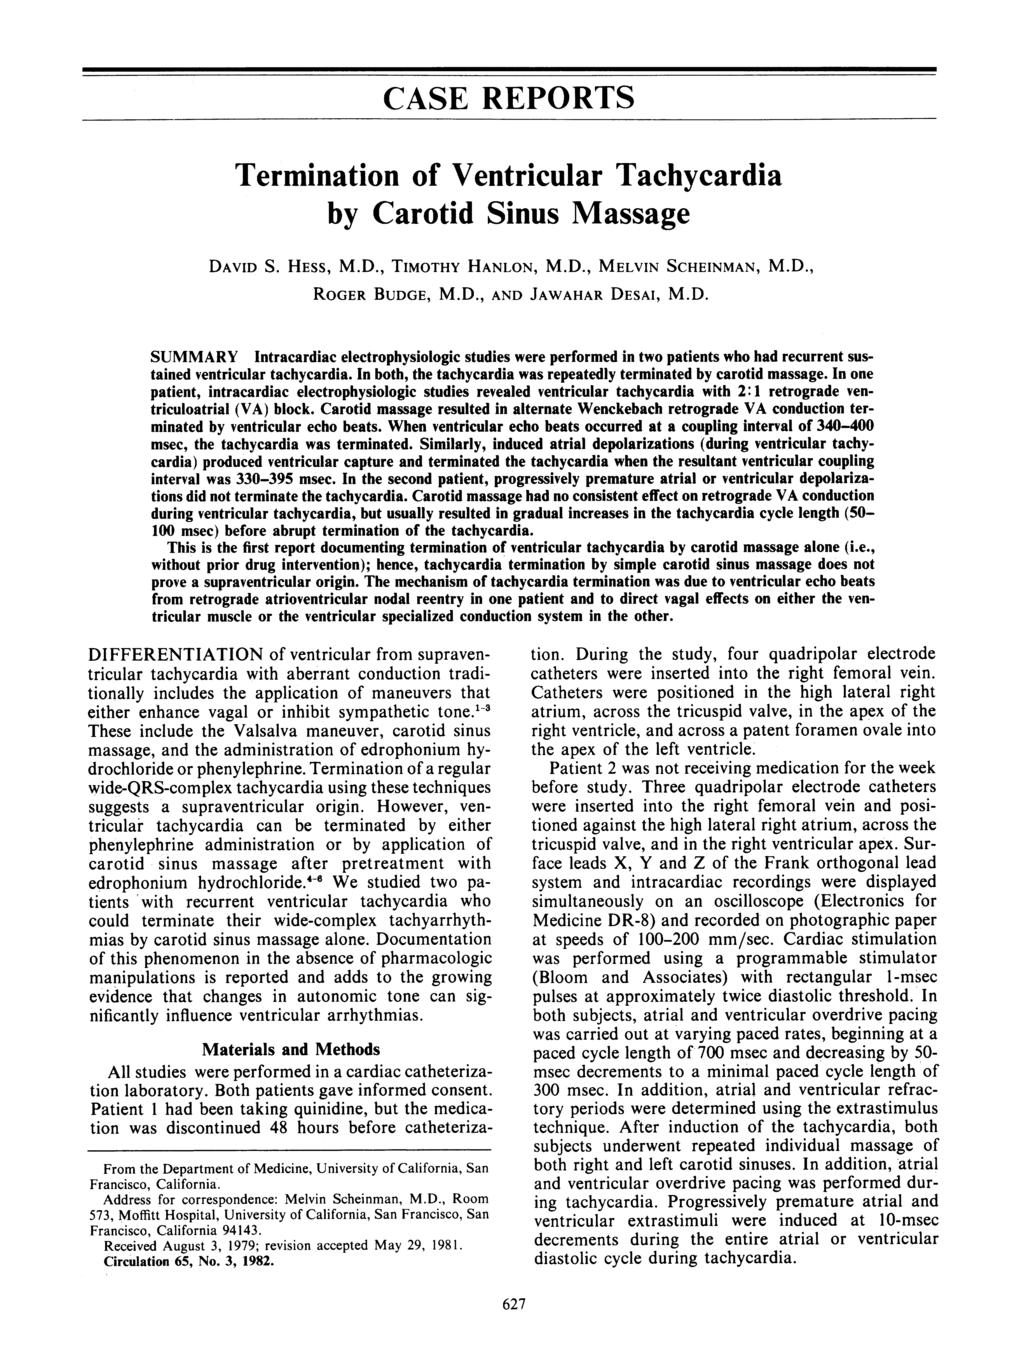 CASE REPORTS Termination of Ventricular Tachycardia by Carotid Sinus Massage DA